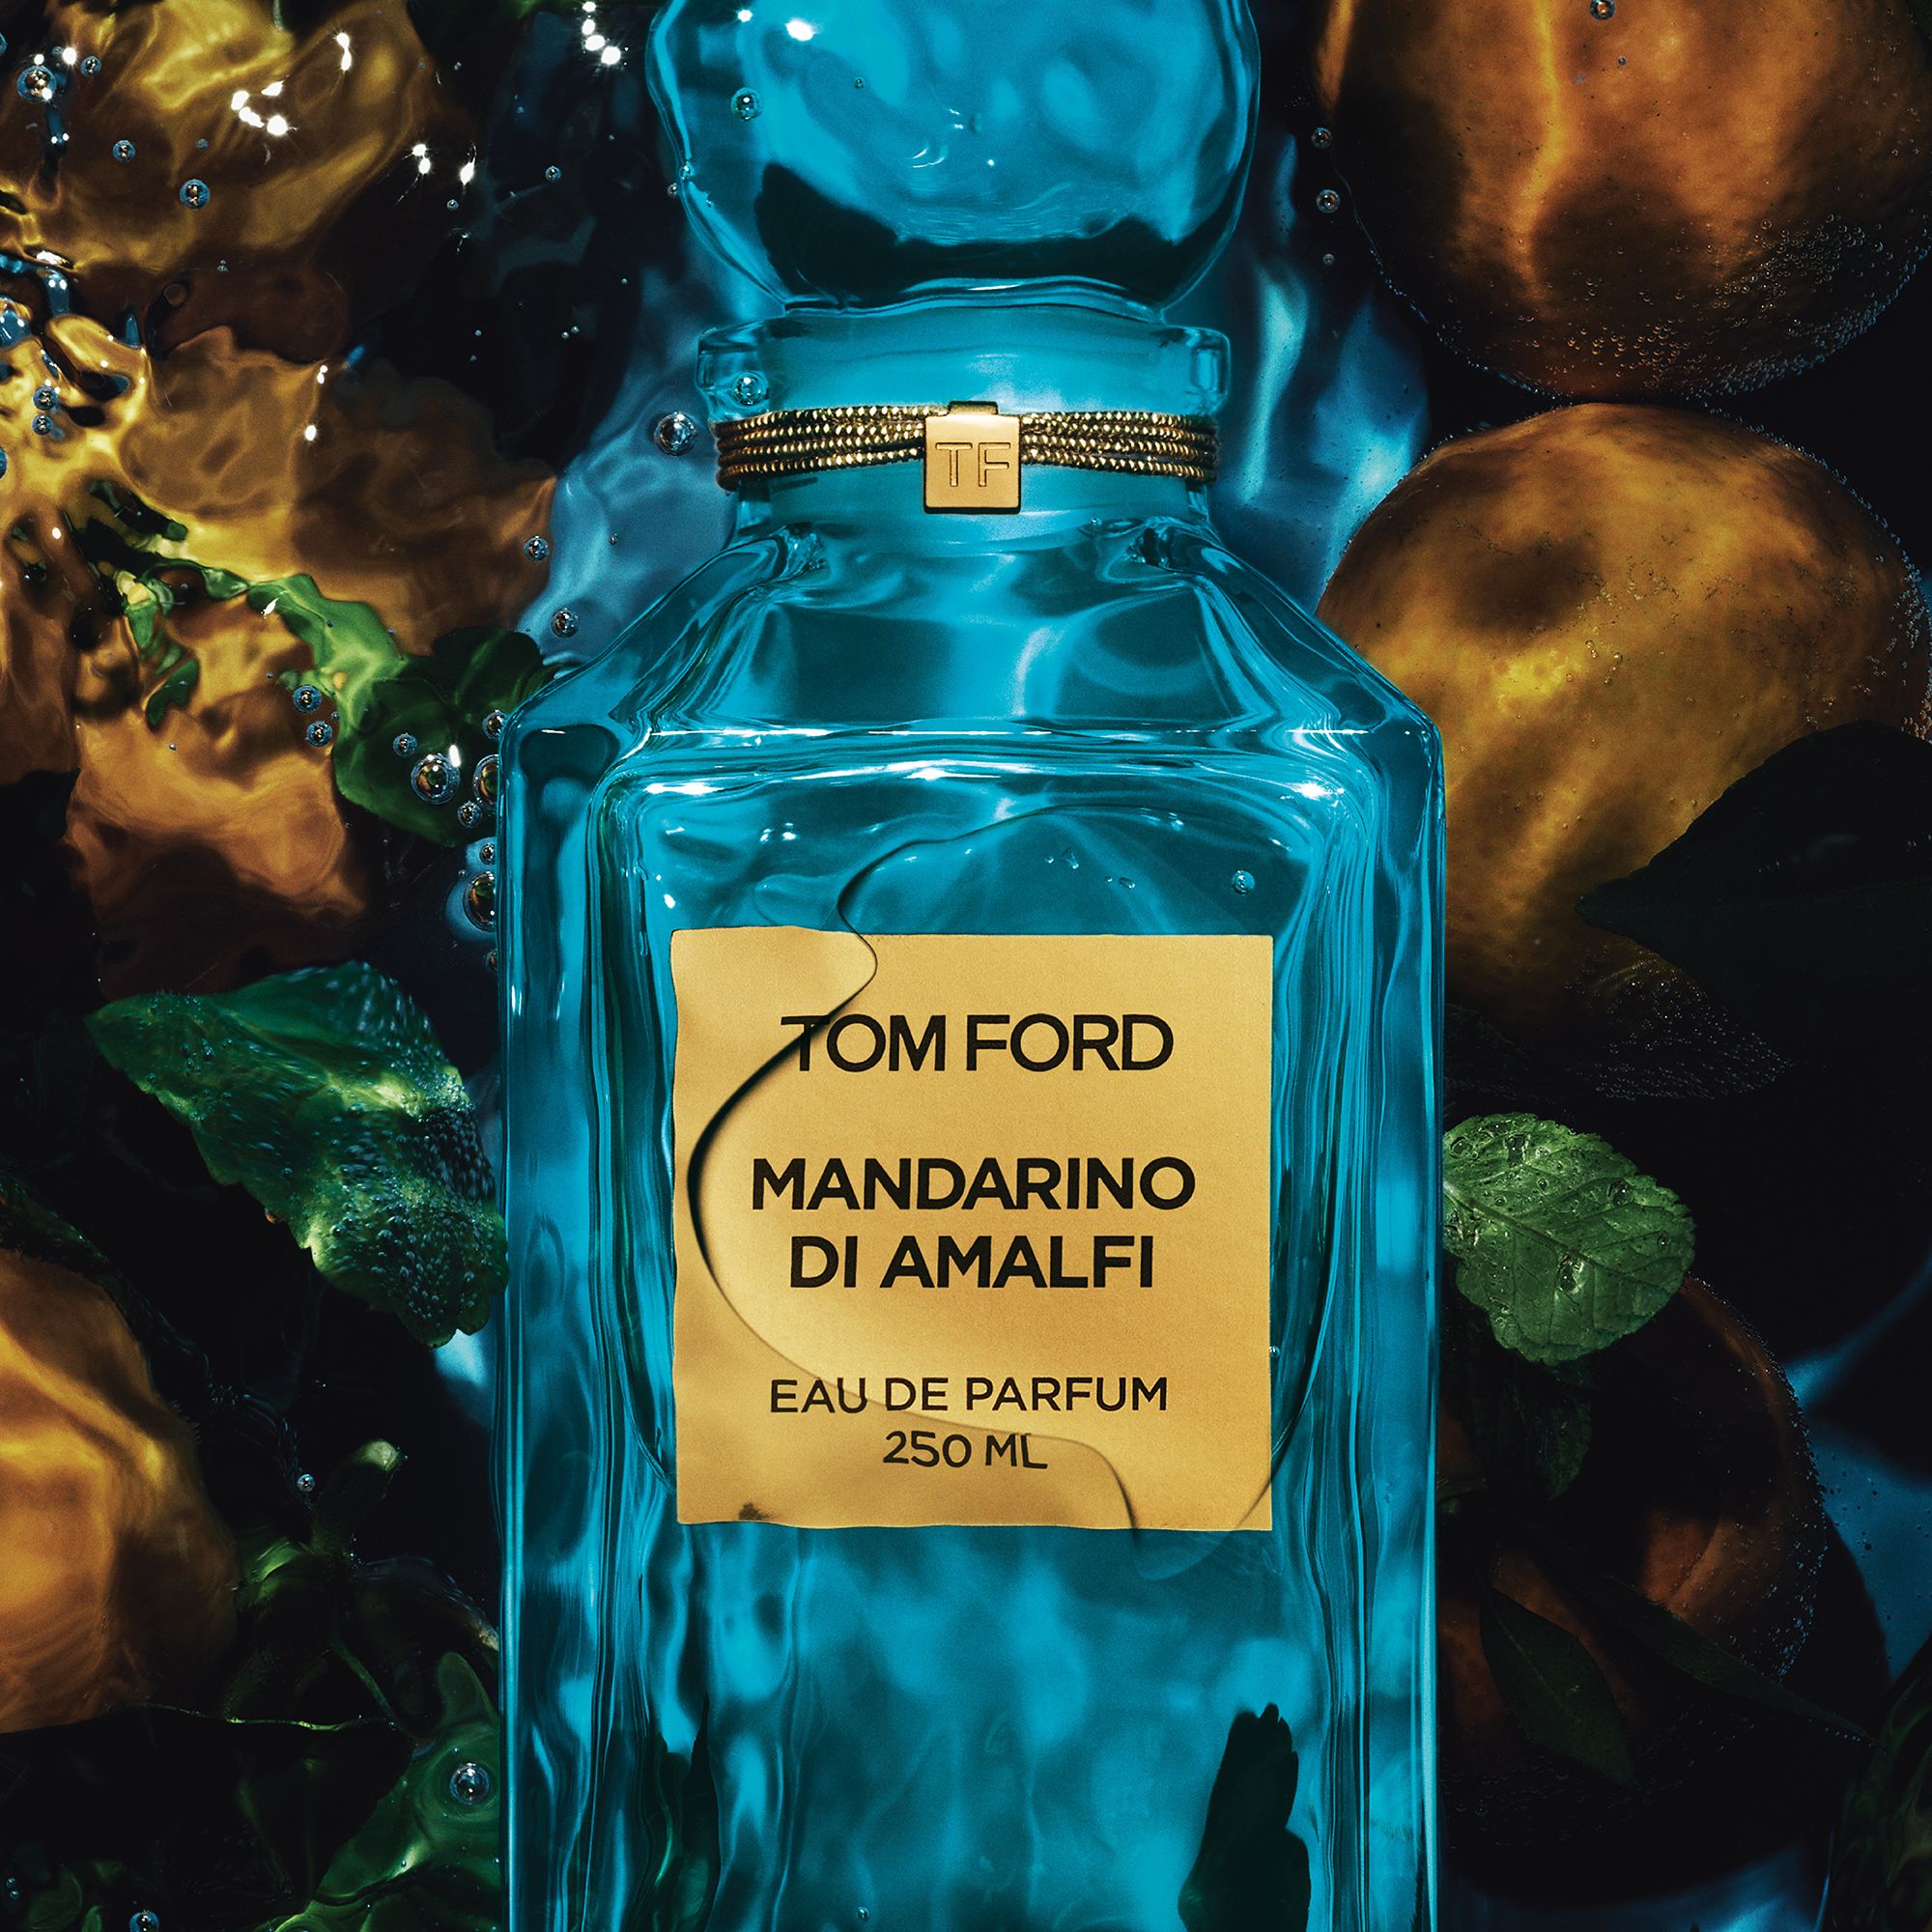 TOM FORD Private Blend Mandarino Di Amalfi Eau de Parfum, 50ml at John  Lewis & Partners